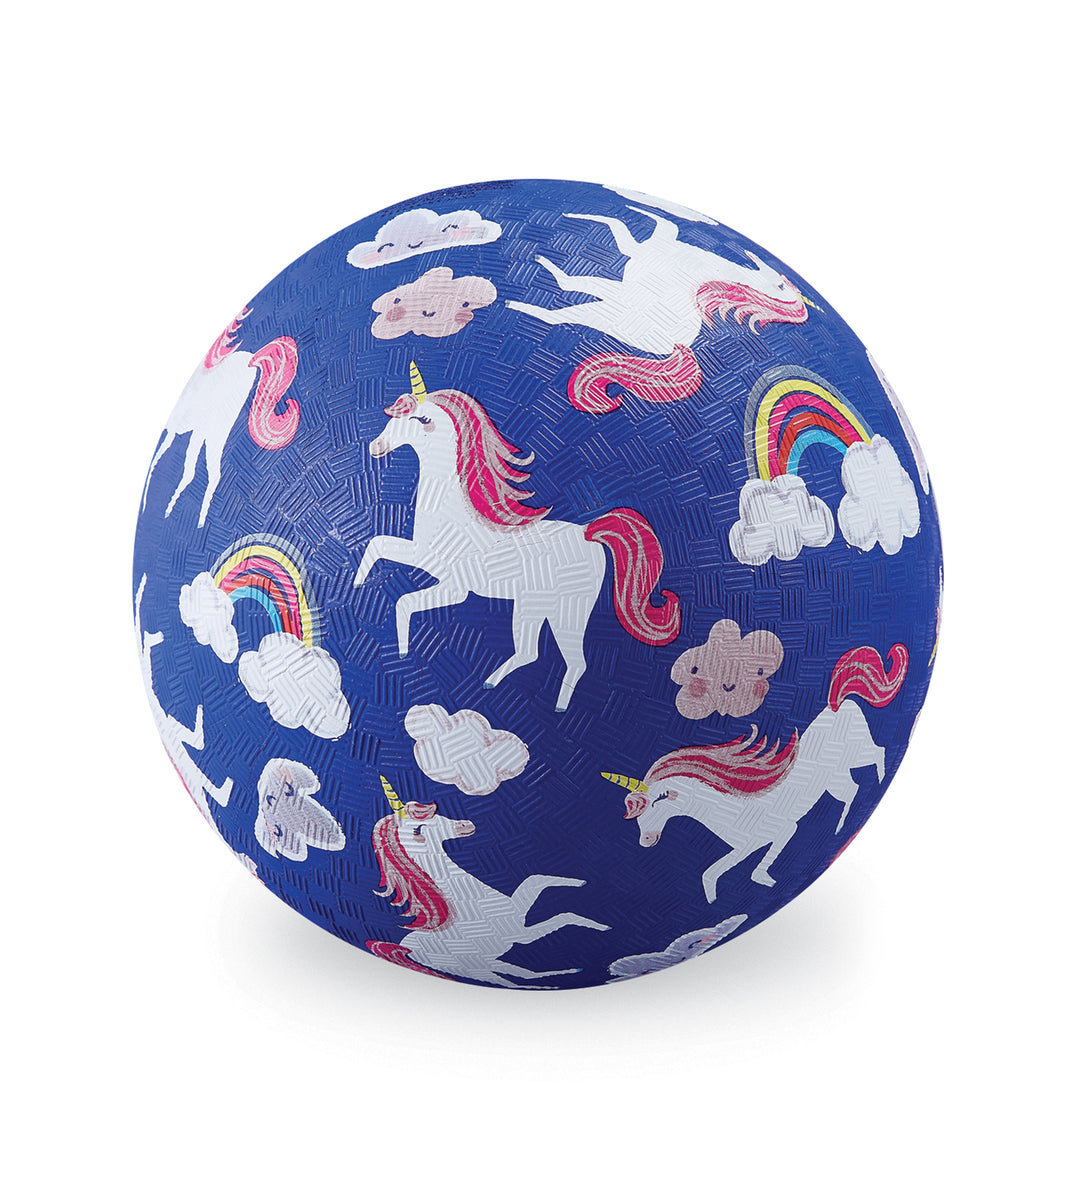 7 Inch Ball - Unicorns